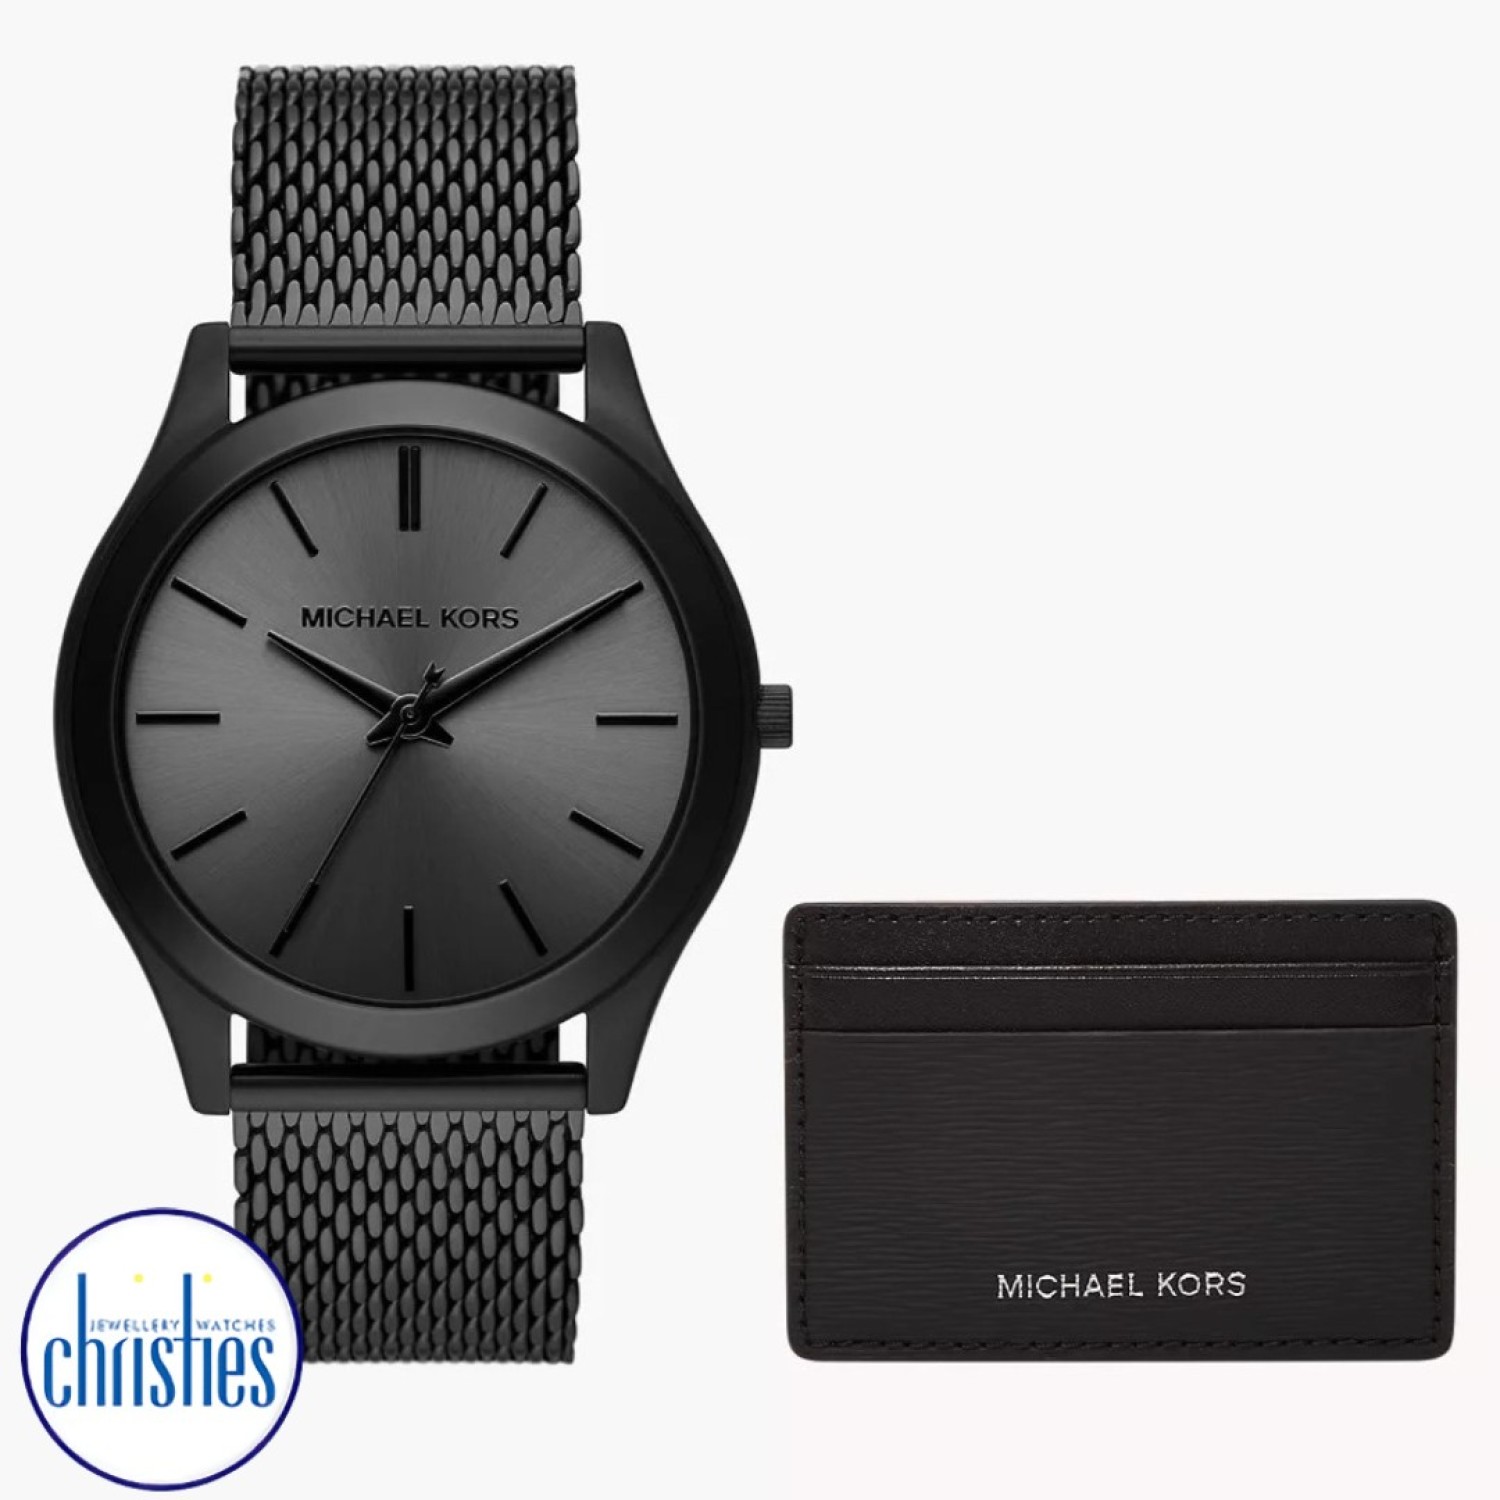 MK1085SET Michael Kors Slim Runway Black-Tone Watch and Card Case Gift Set MK1085SET Watches Auckland